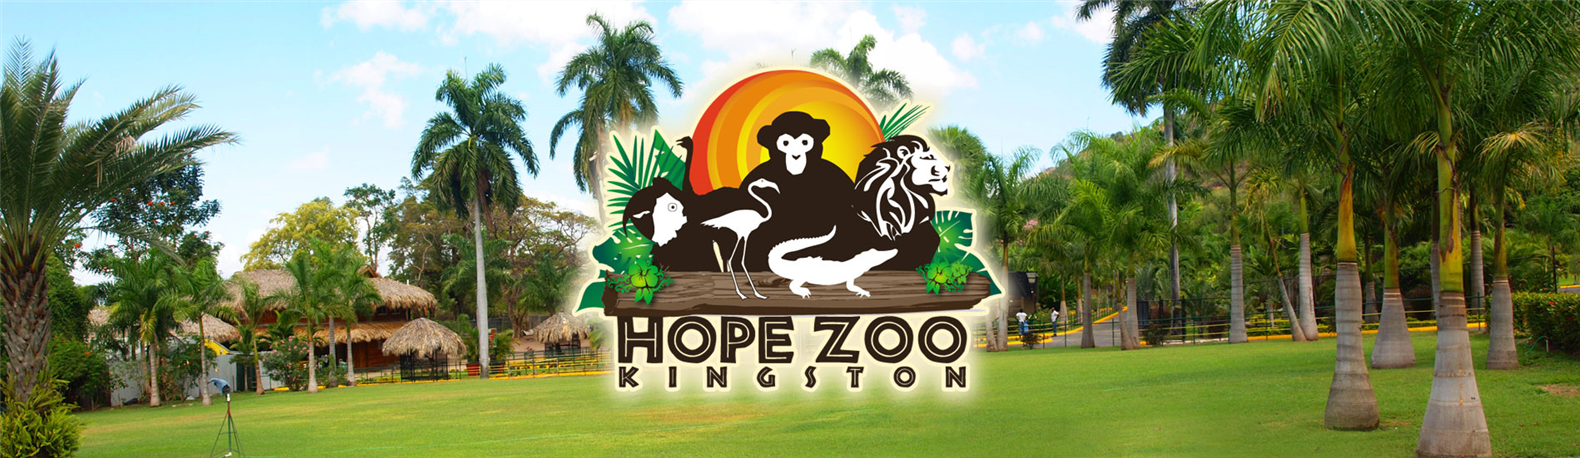 Hope Zoo